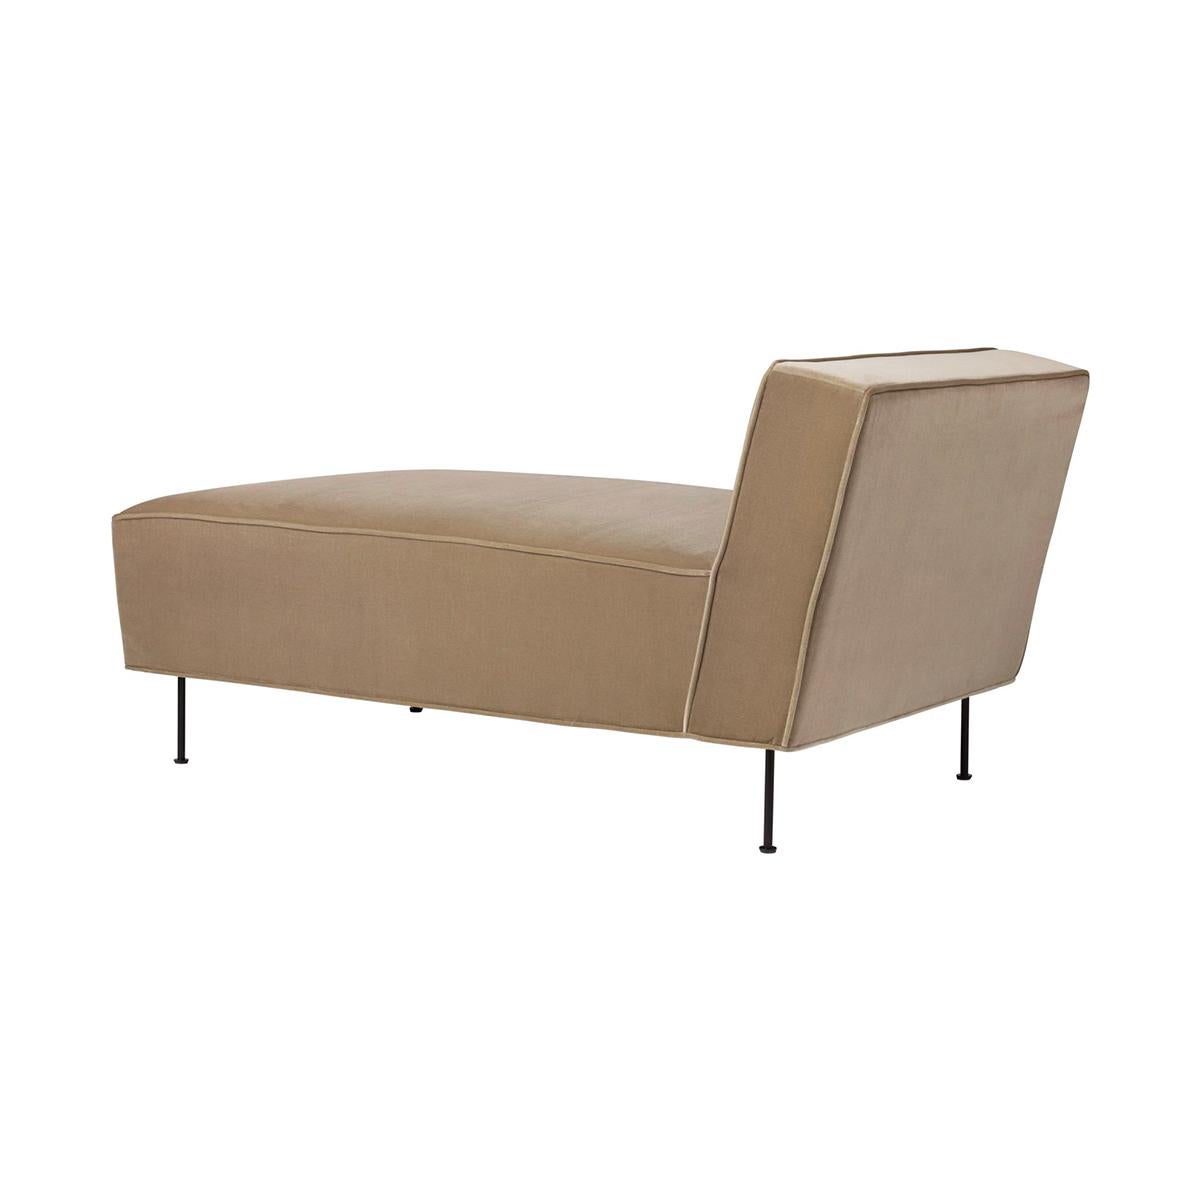 Danish Modern Line Cotton Velour Chaise Lounge